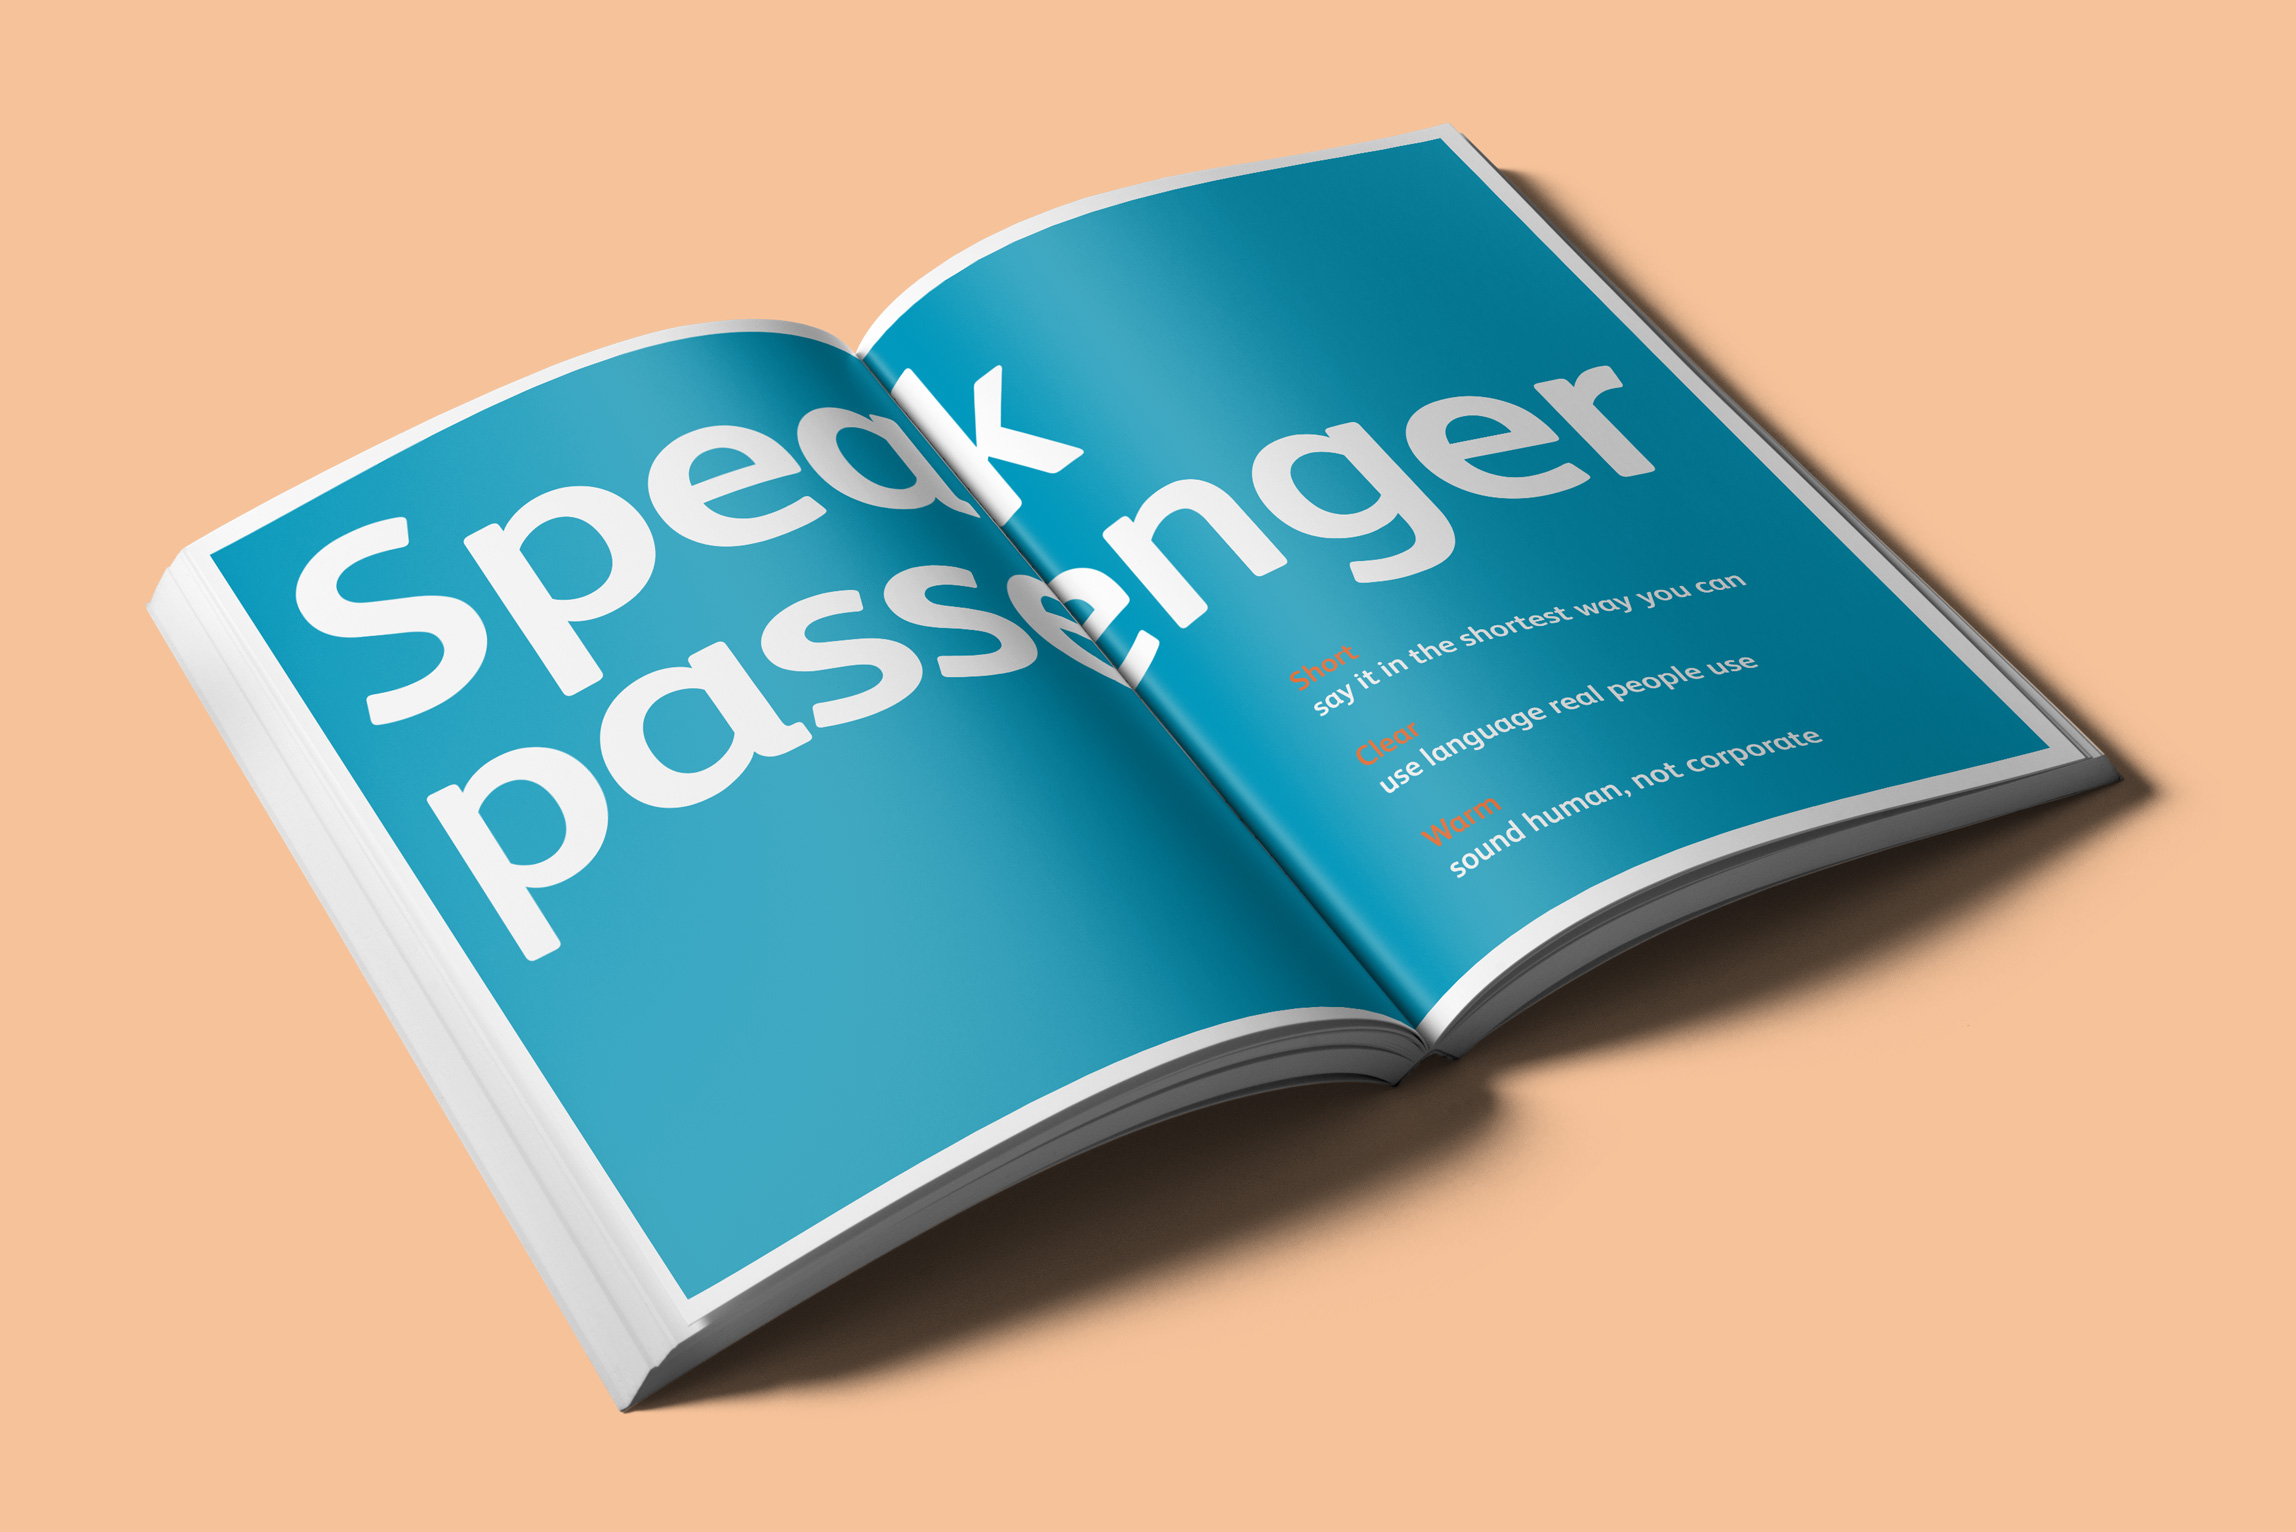 Network Rail Speak Passenger Tone of Voice book spread